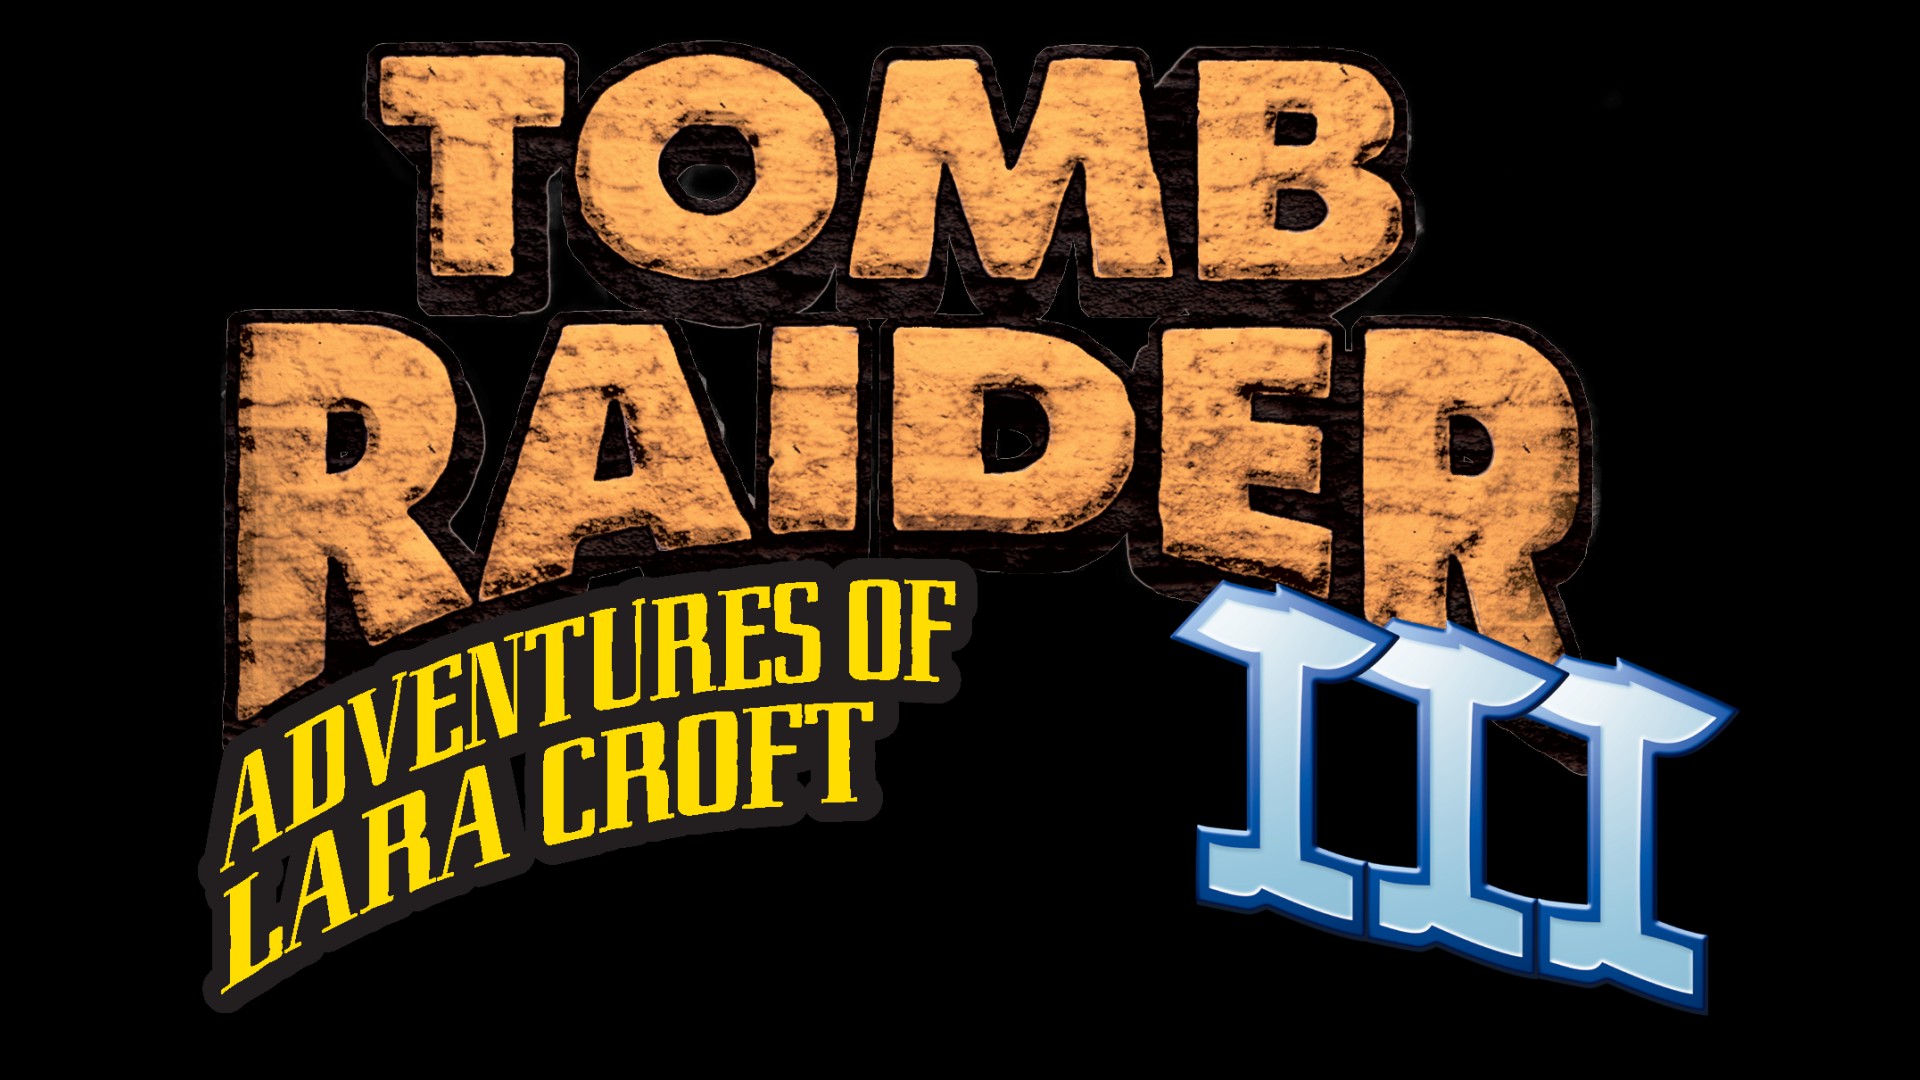 download Tomb Raider III: Adventures of Lara Croft